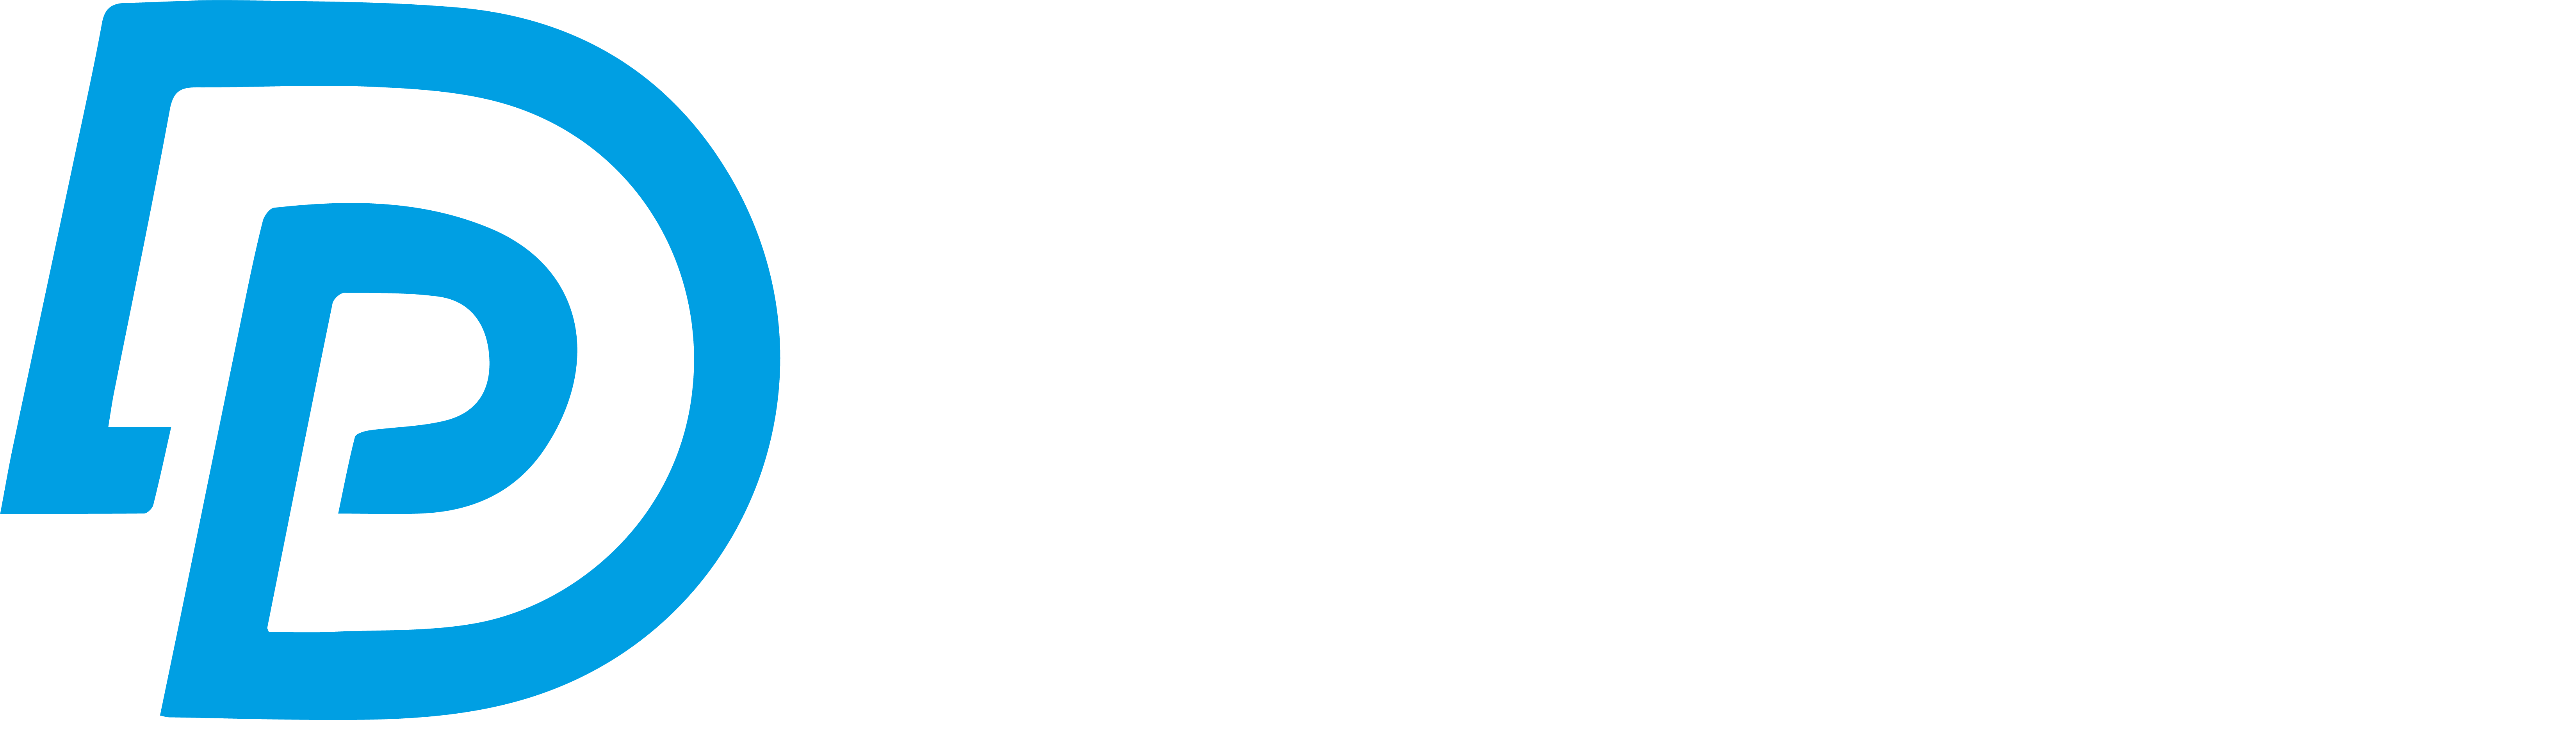 Portal Deporte